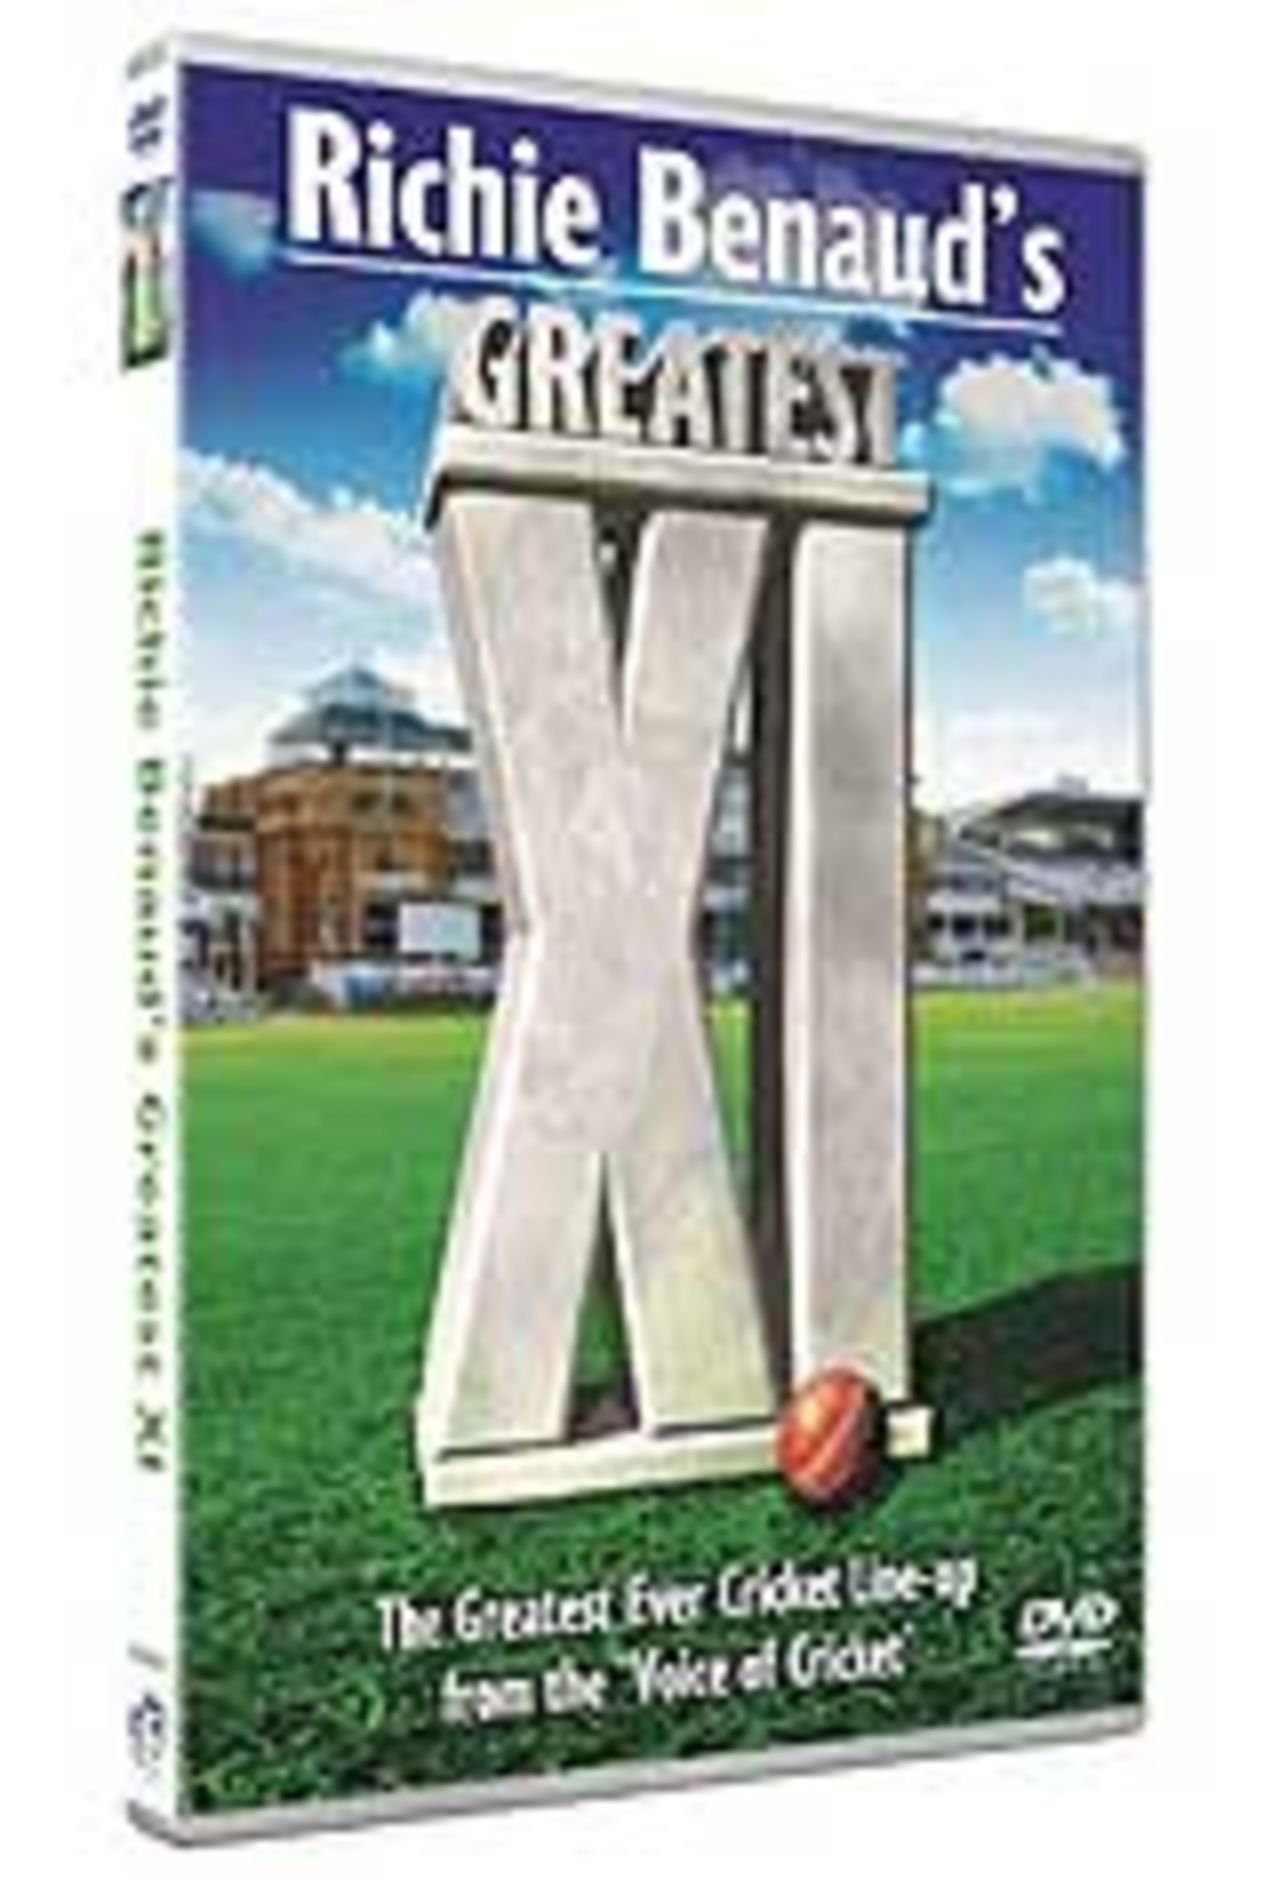 Richie Benaud's Greatest XI - DVD cover